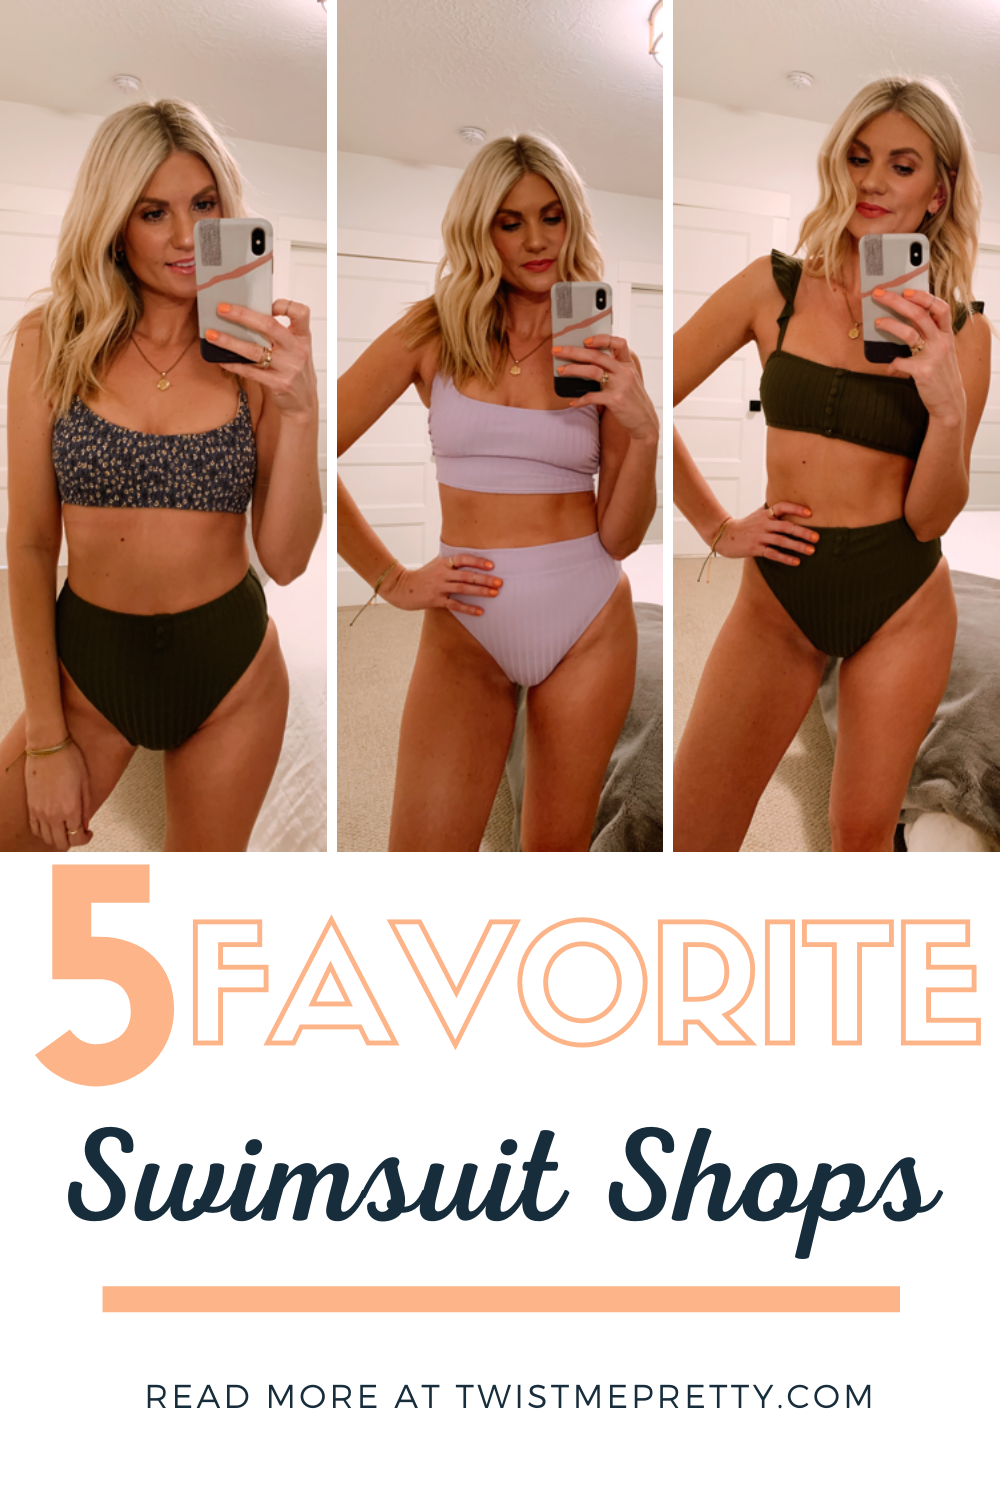 5 favorite swimsuit shops for summer. www.TwistMePretty.com